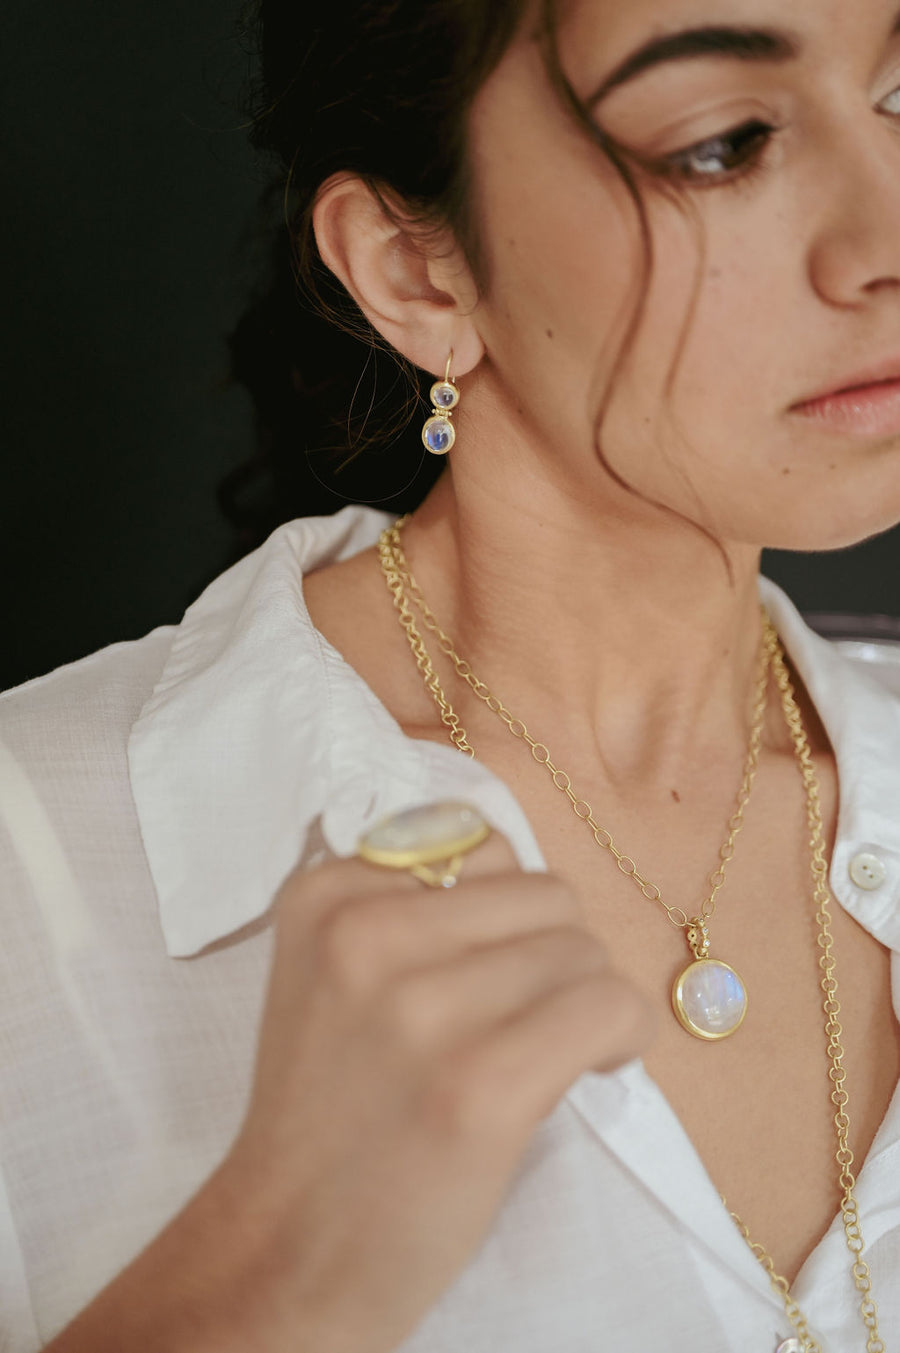 18 Karat Gold Oval Moonstone Pendant with Triple Diamond Granulation Beads